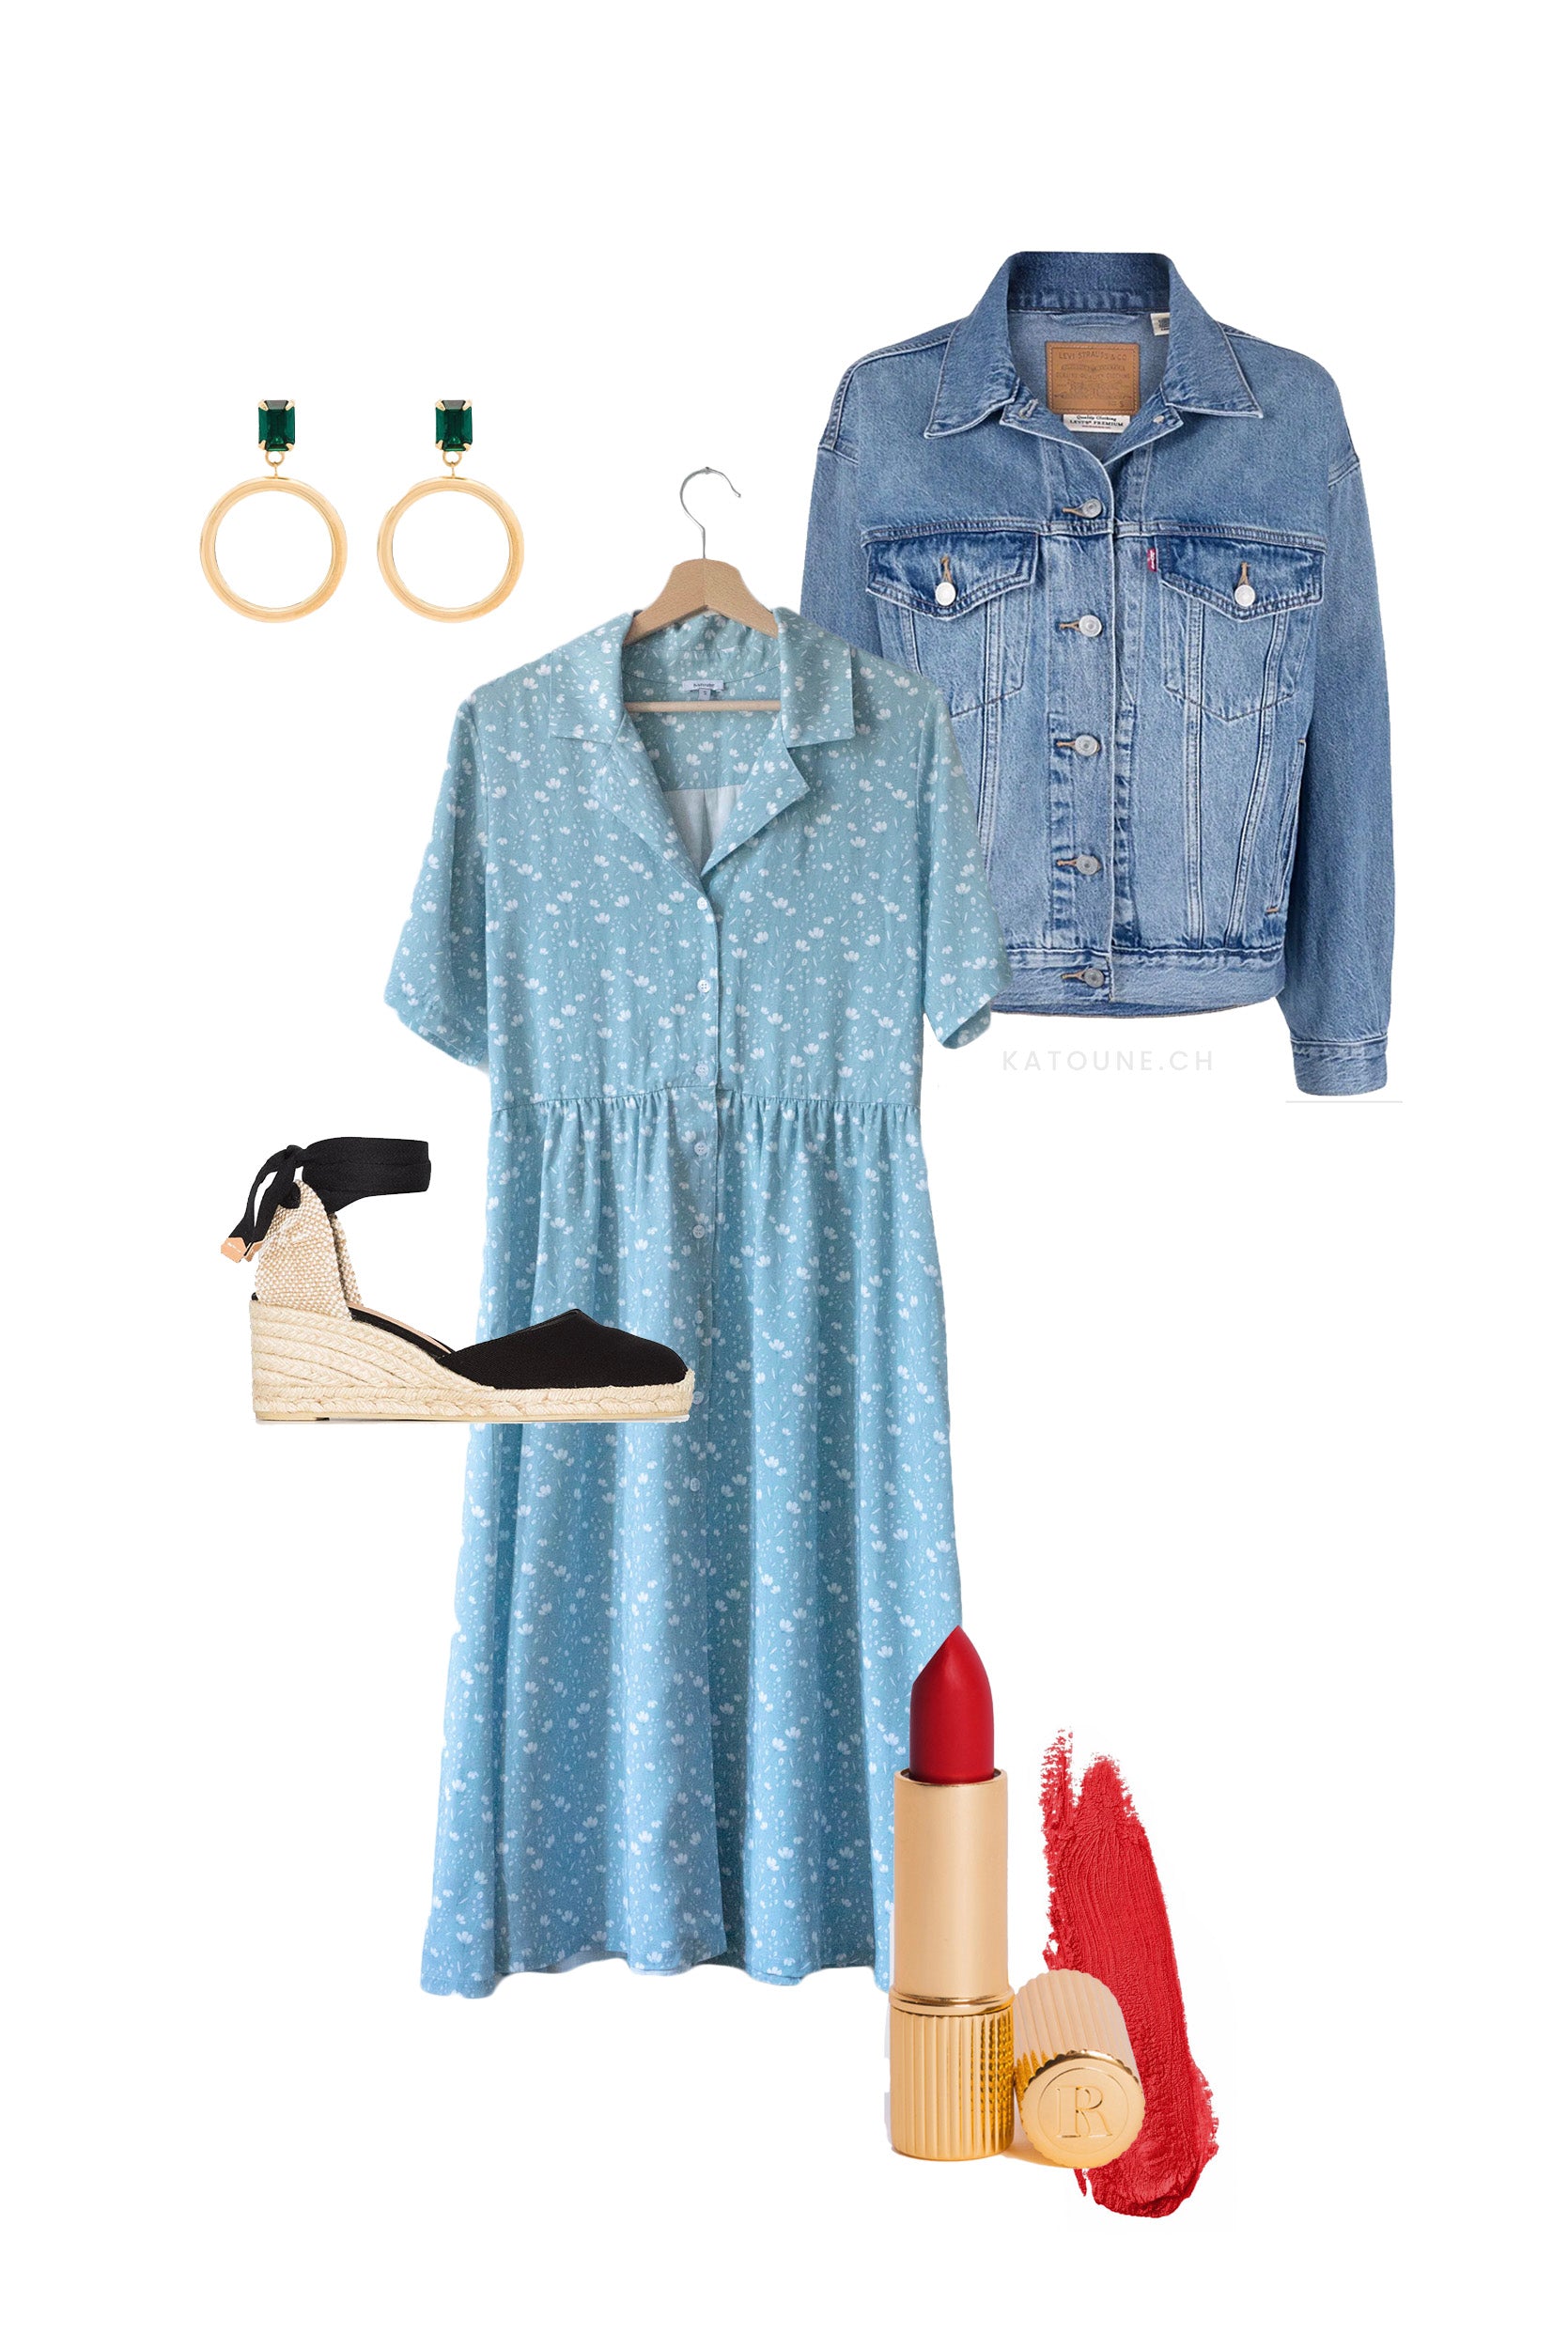 robe bleu ciel | style vintage | pret a porter